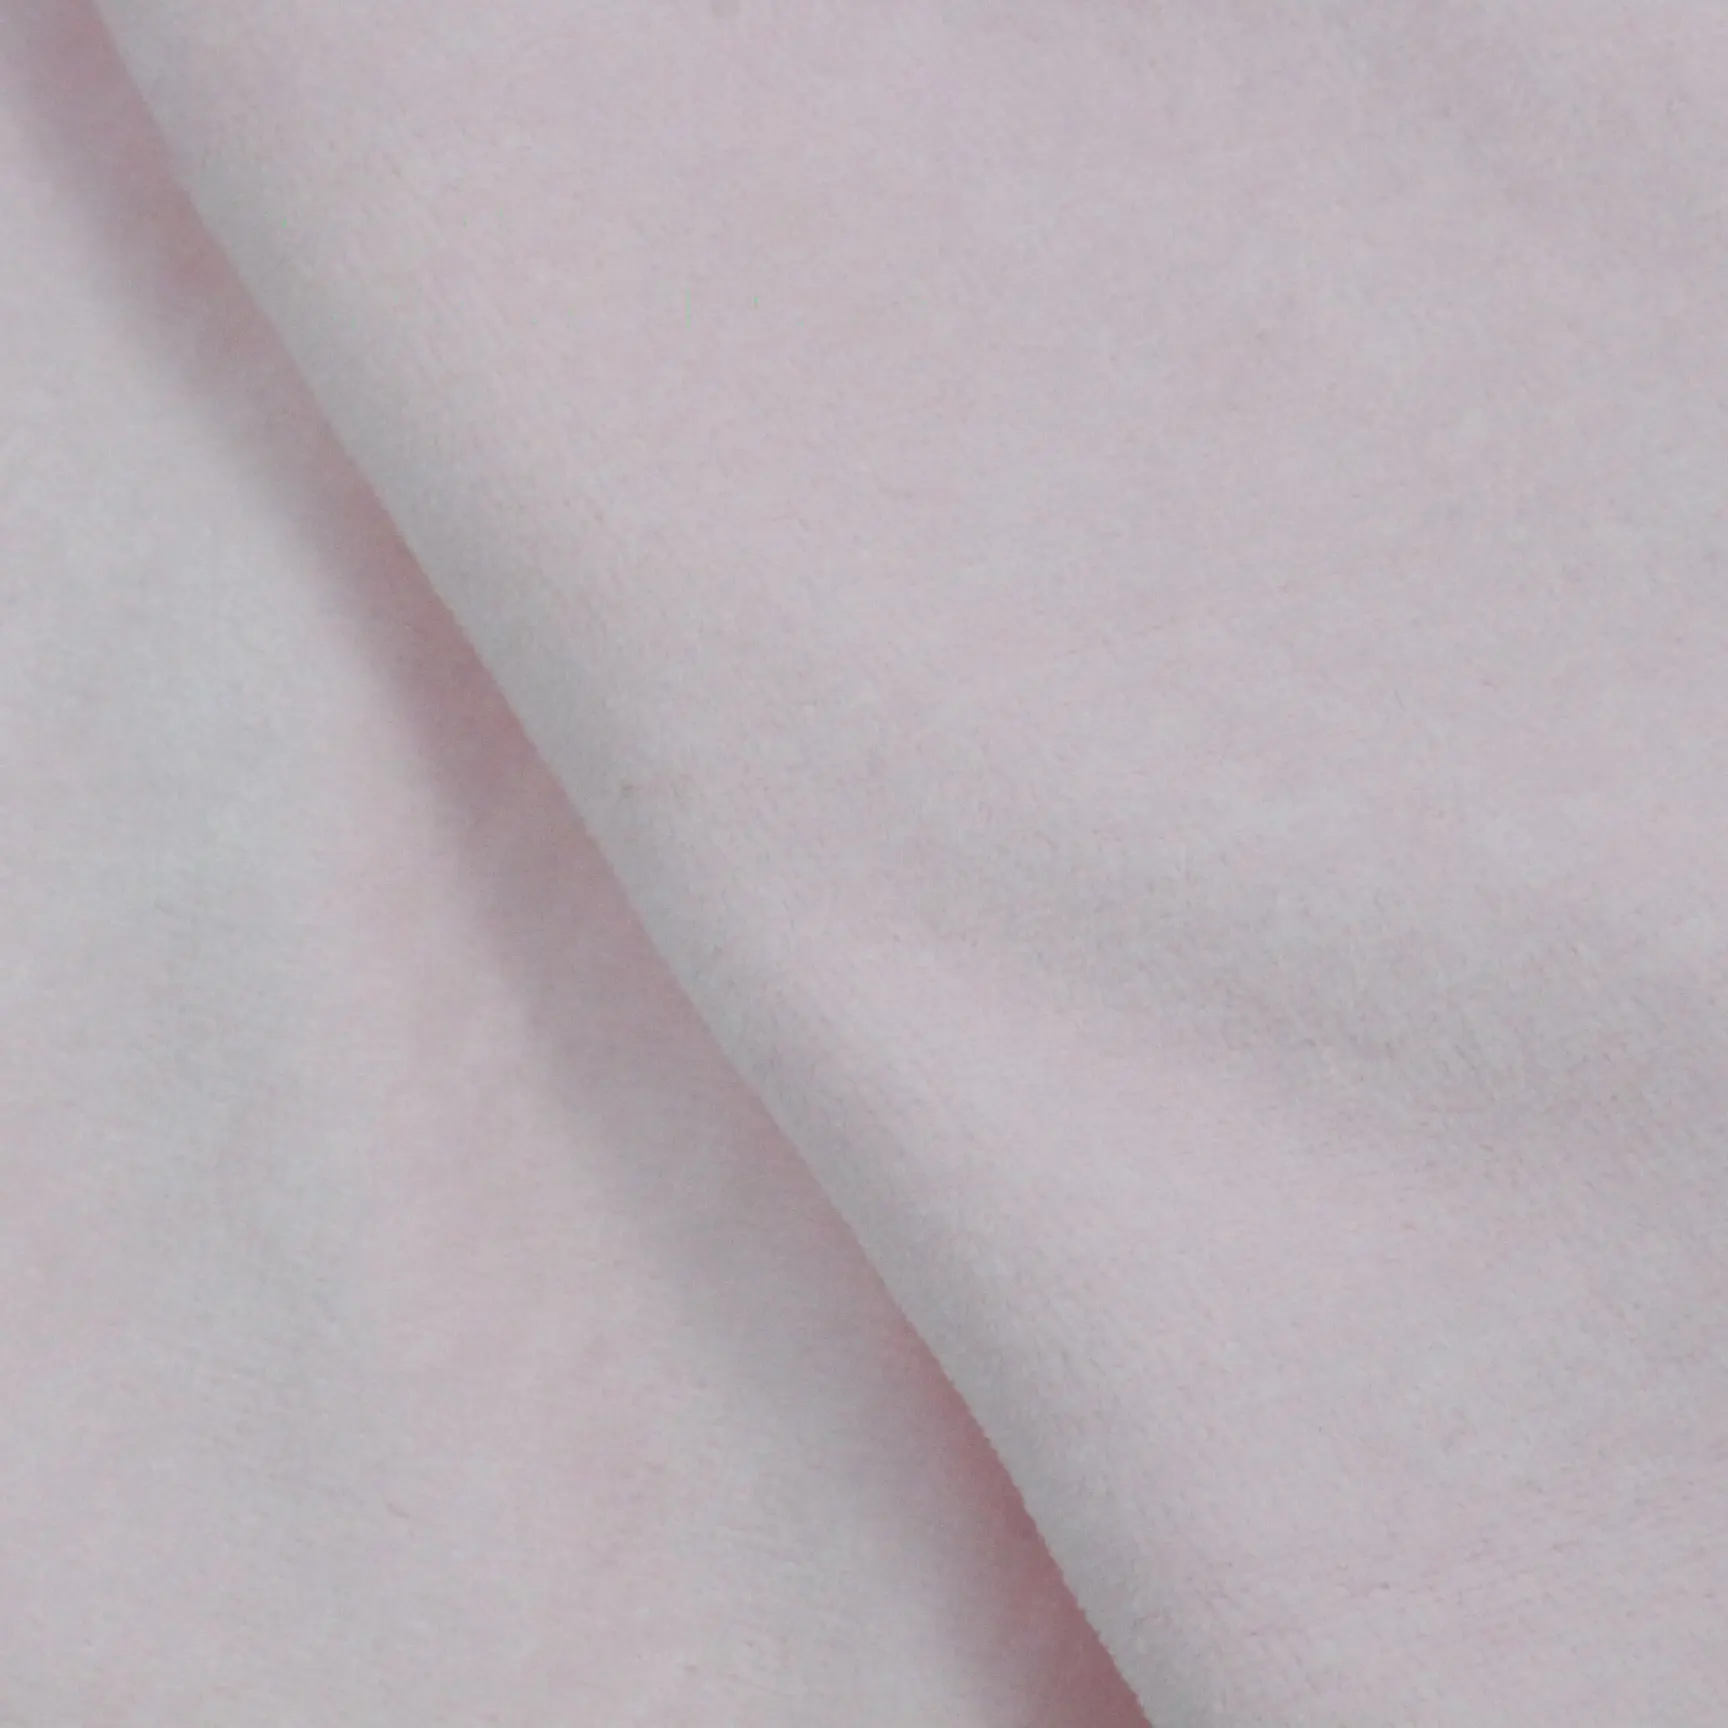 Solid Color woman sleepwear 100% cotton organic blue garment fabric